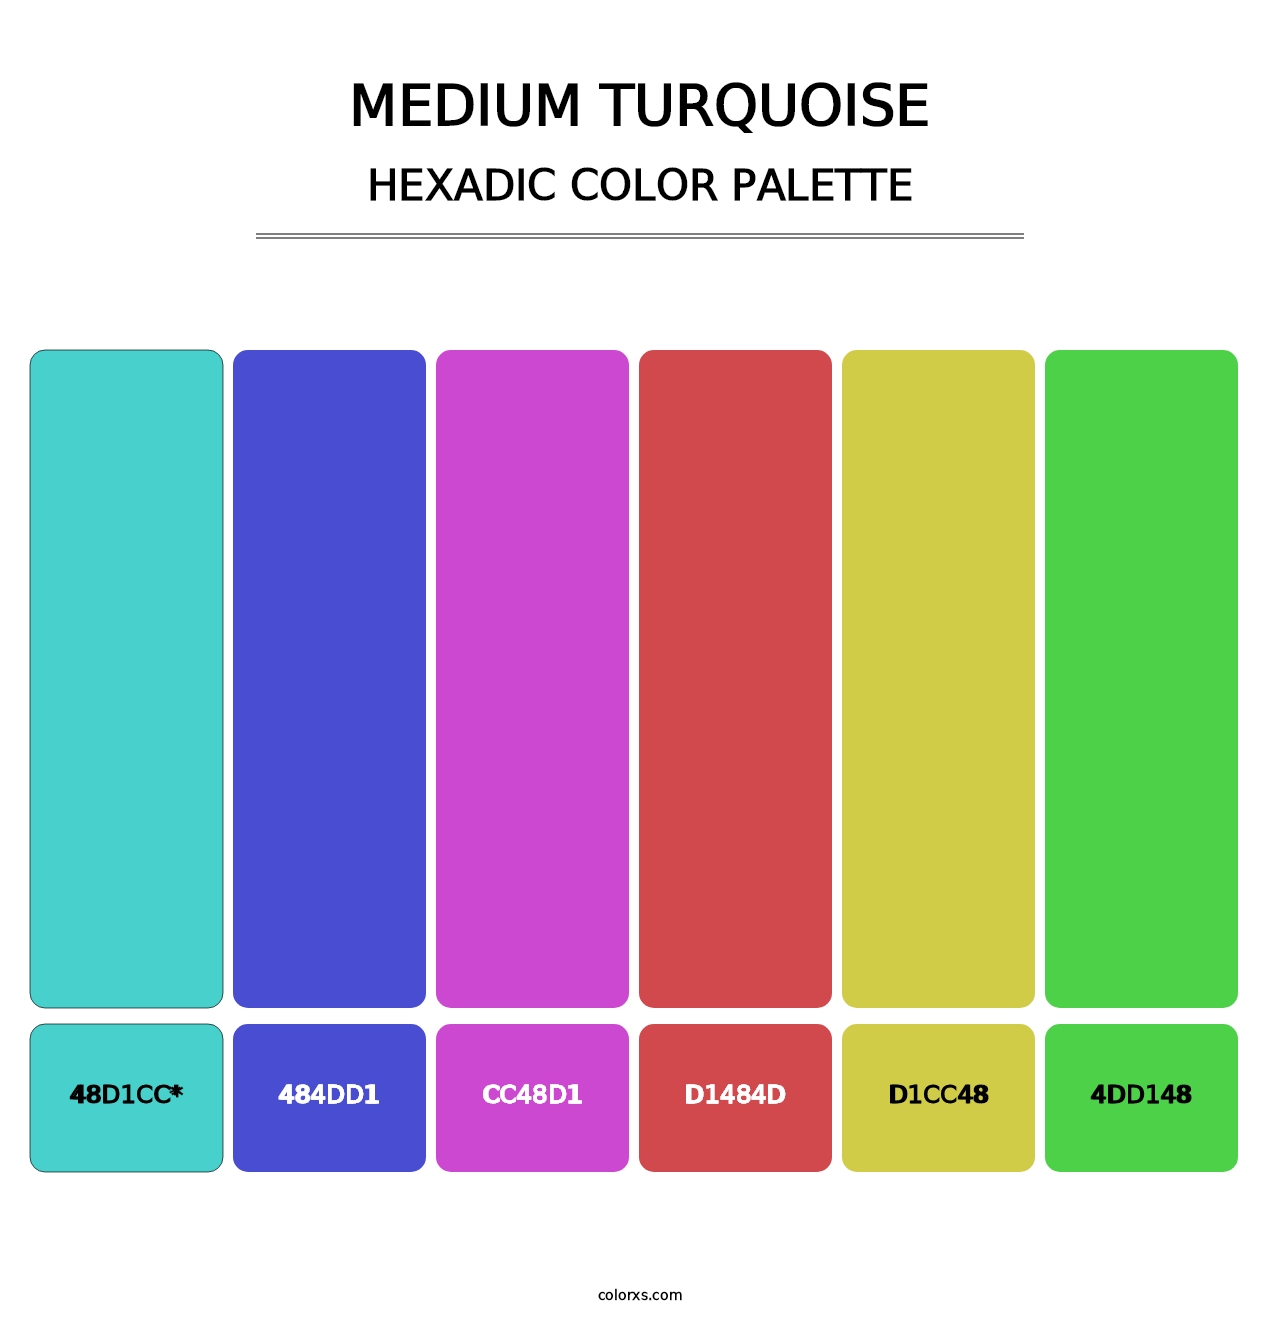 Medium Turquoise - Hexadic Color Palette